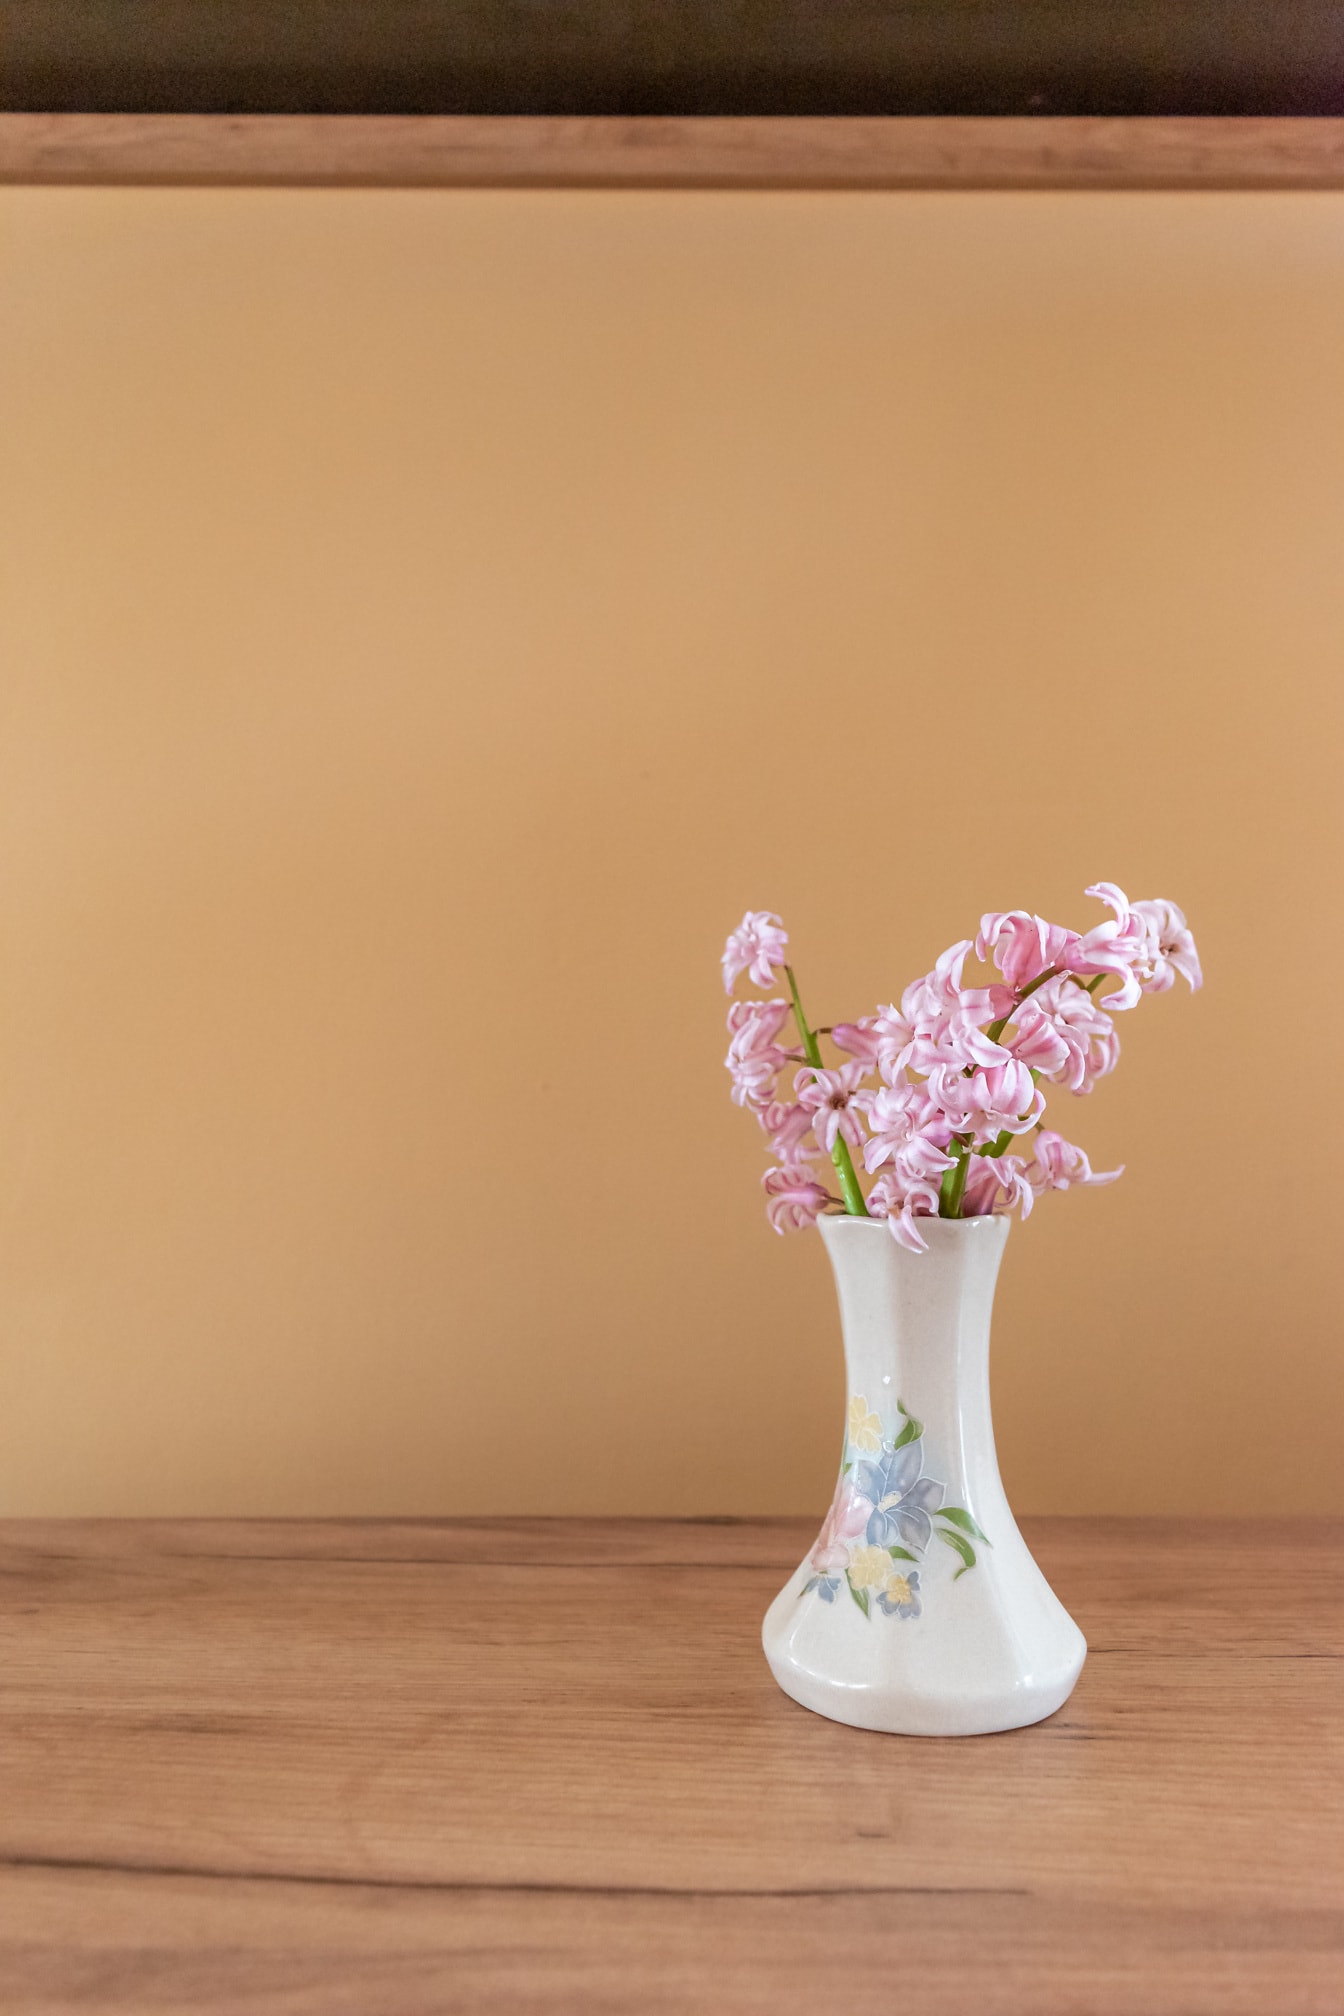 Bright pinkish hyacinth flowers in vase